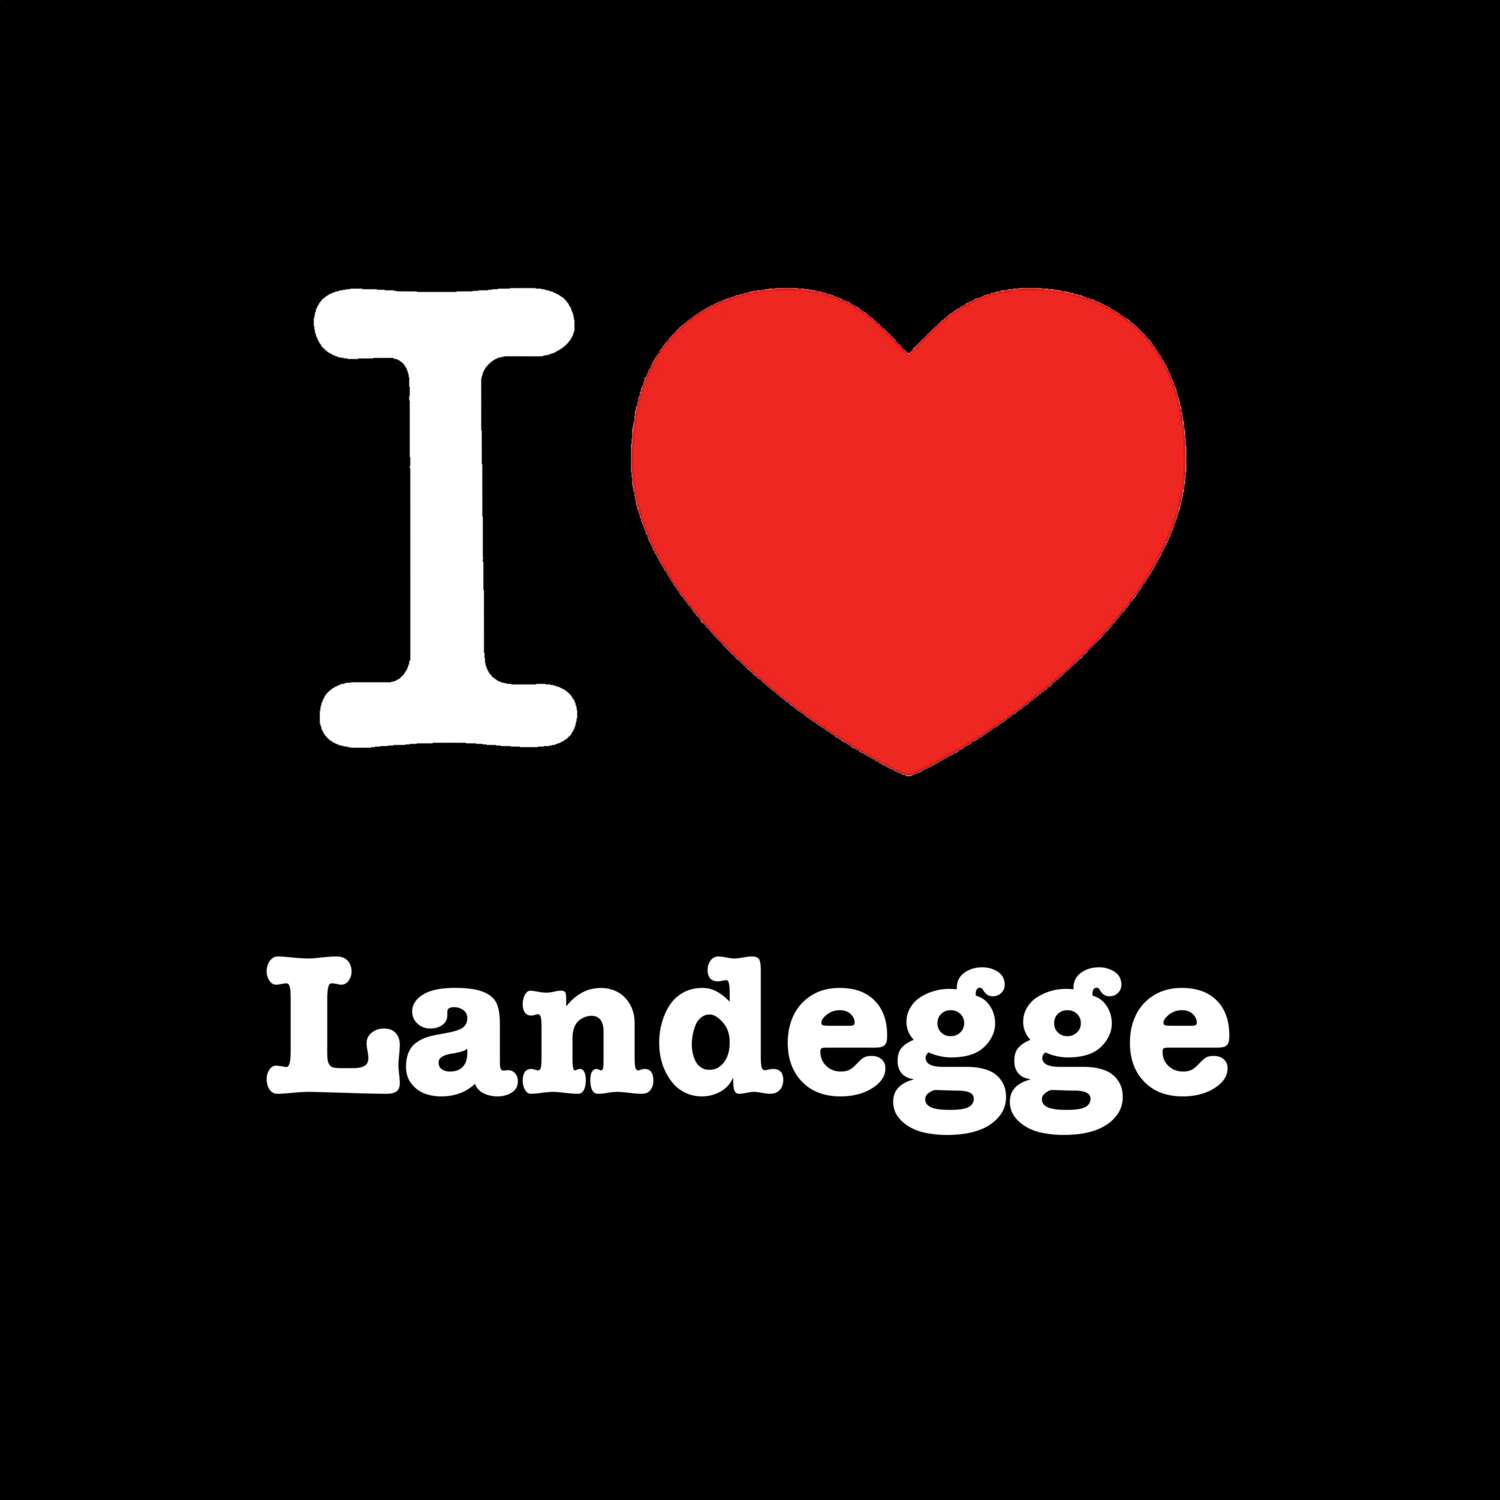 Landegge T-Shirt »I love«